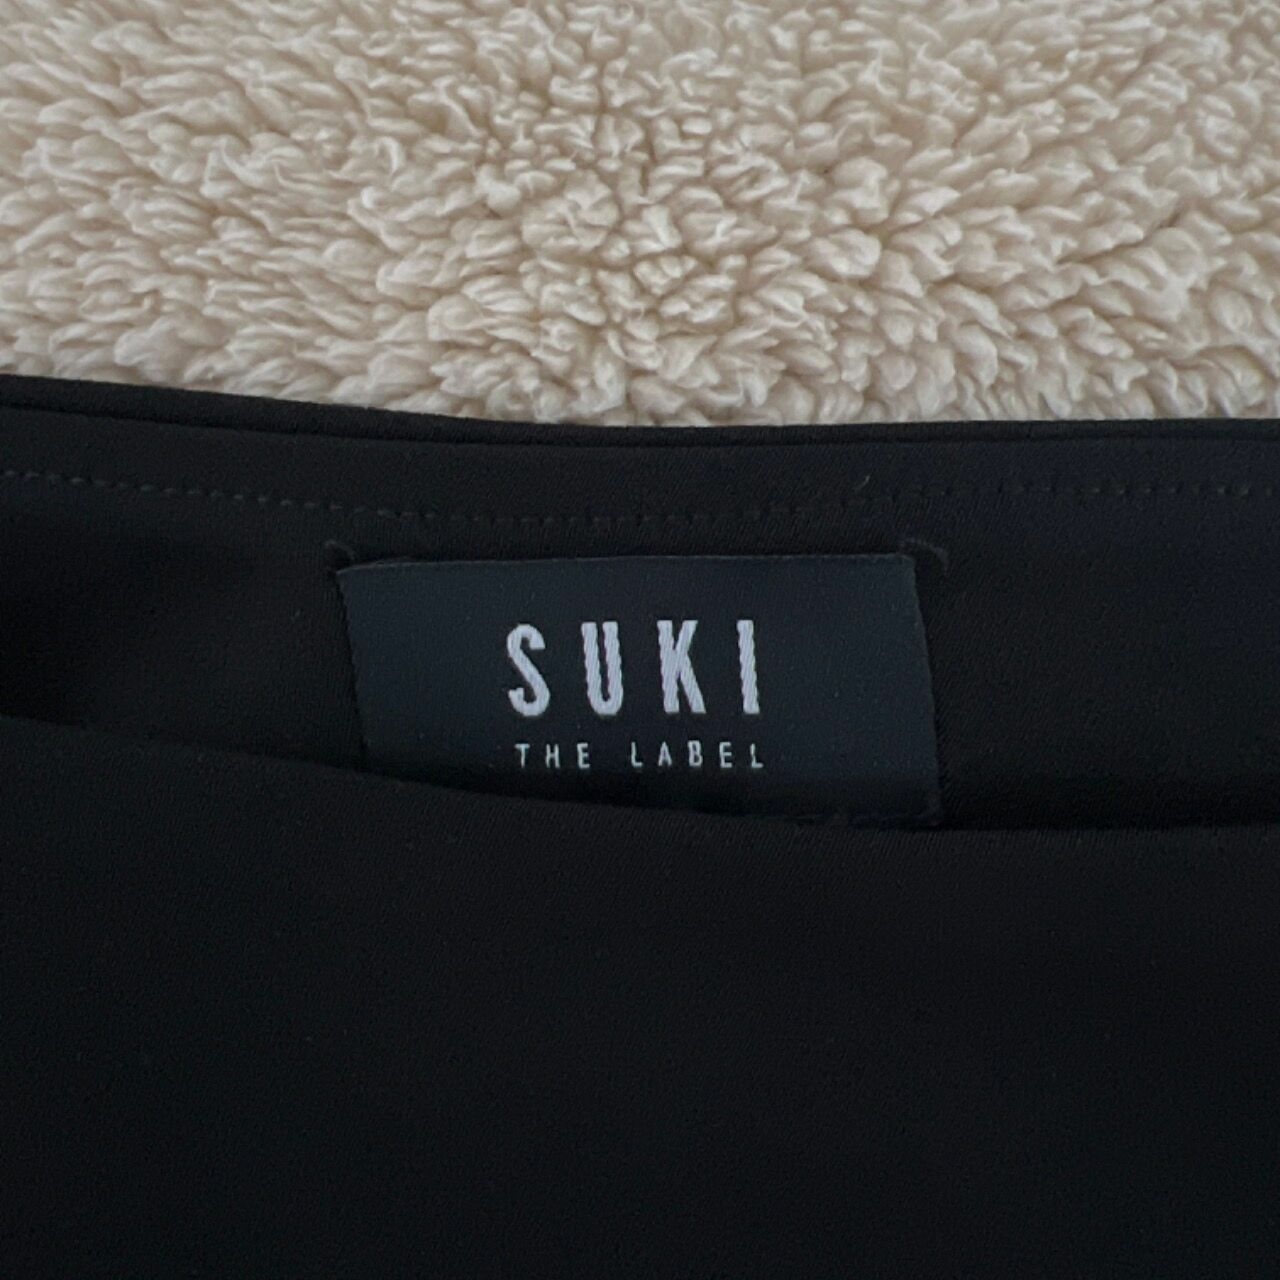 Suki The Label Black Sleeveless